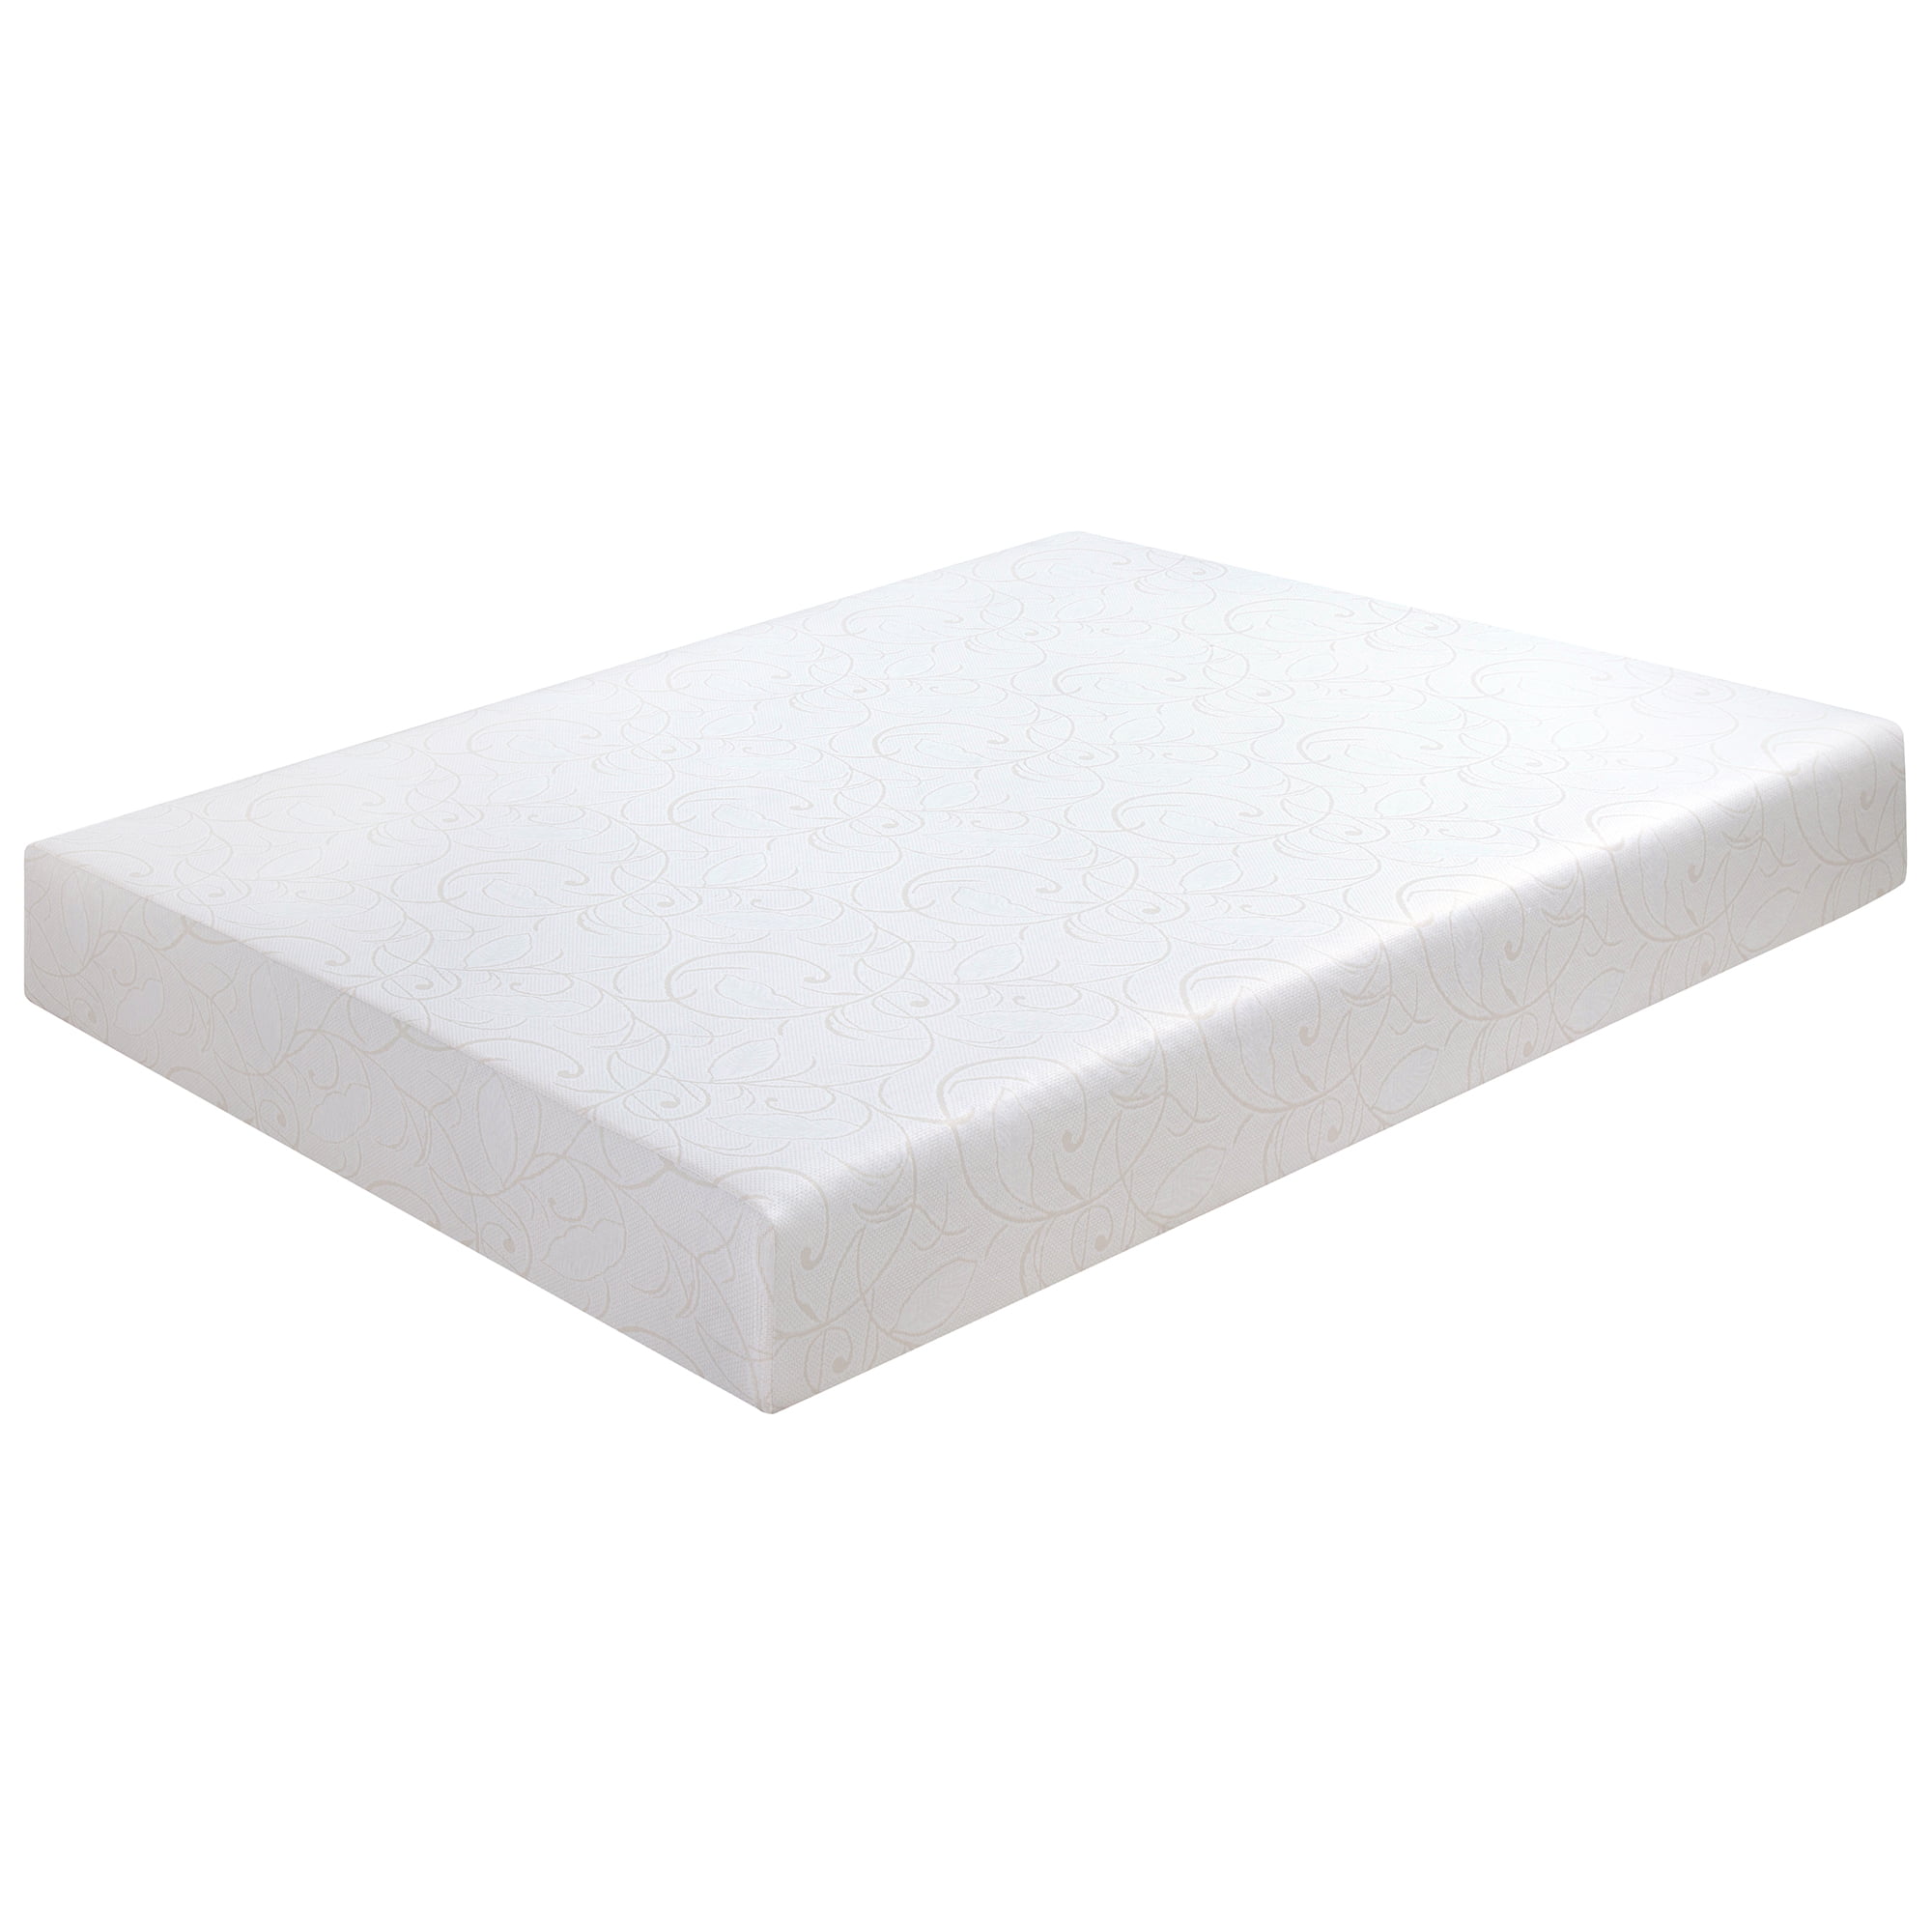 6 inch Memory Foam Mattress All Sizes Bed Cool Firm Sleep Spa Sensations 